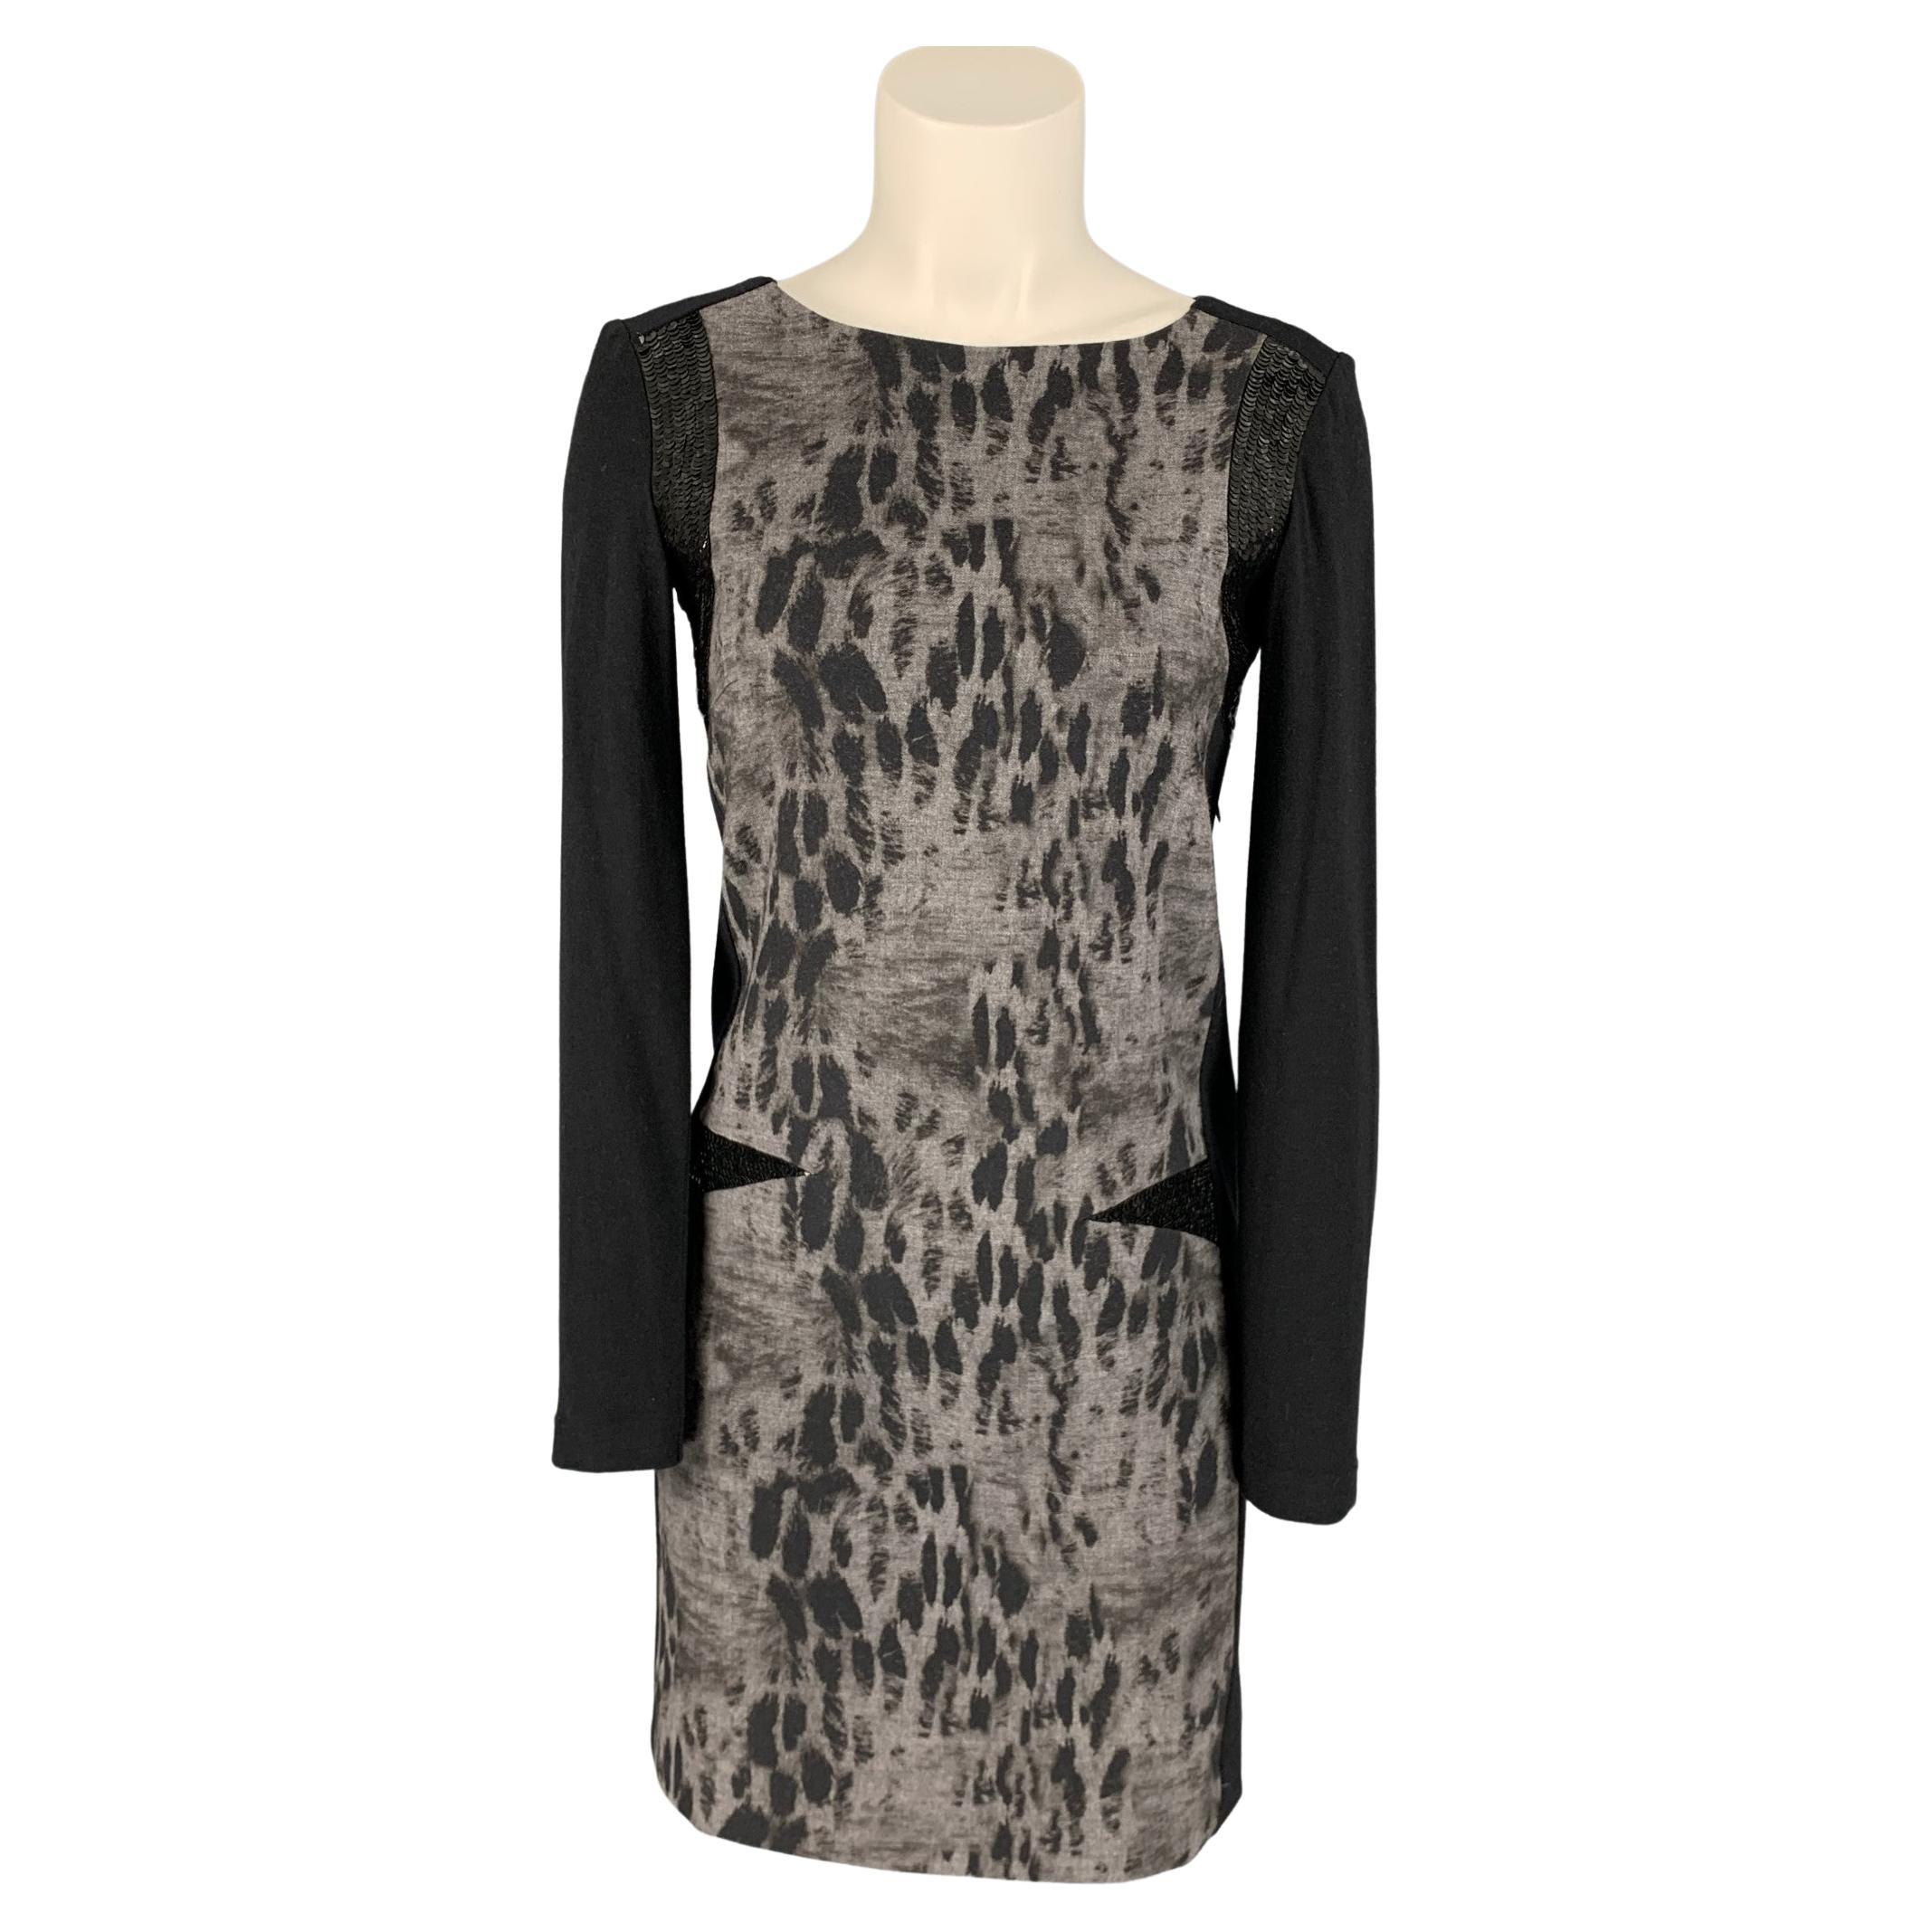 PHILOSOPHY di ALBERTA FERRETTI Size 2 Black & Grey Rayon Blend Color Block Dress